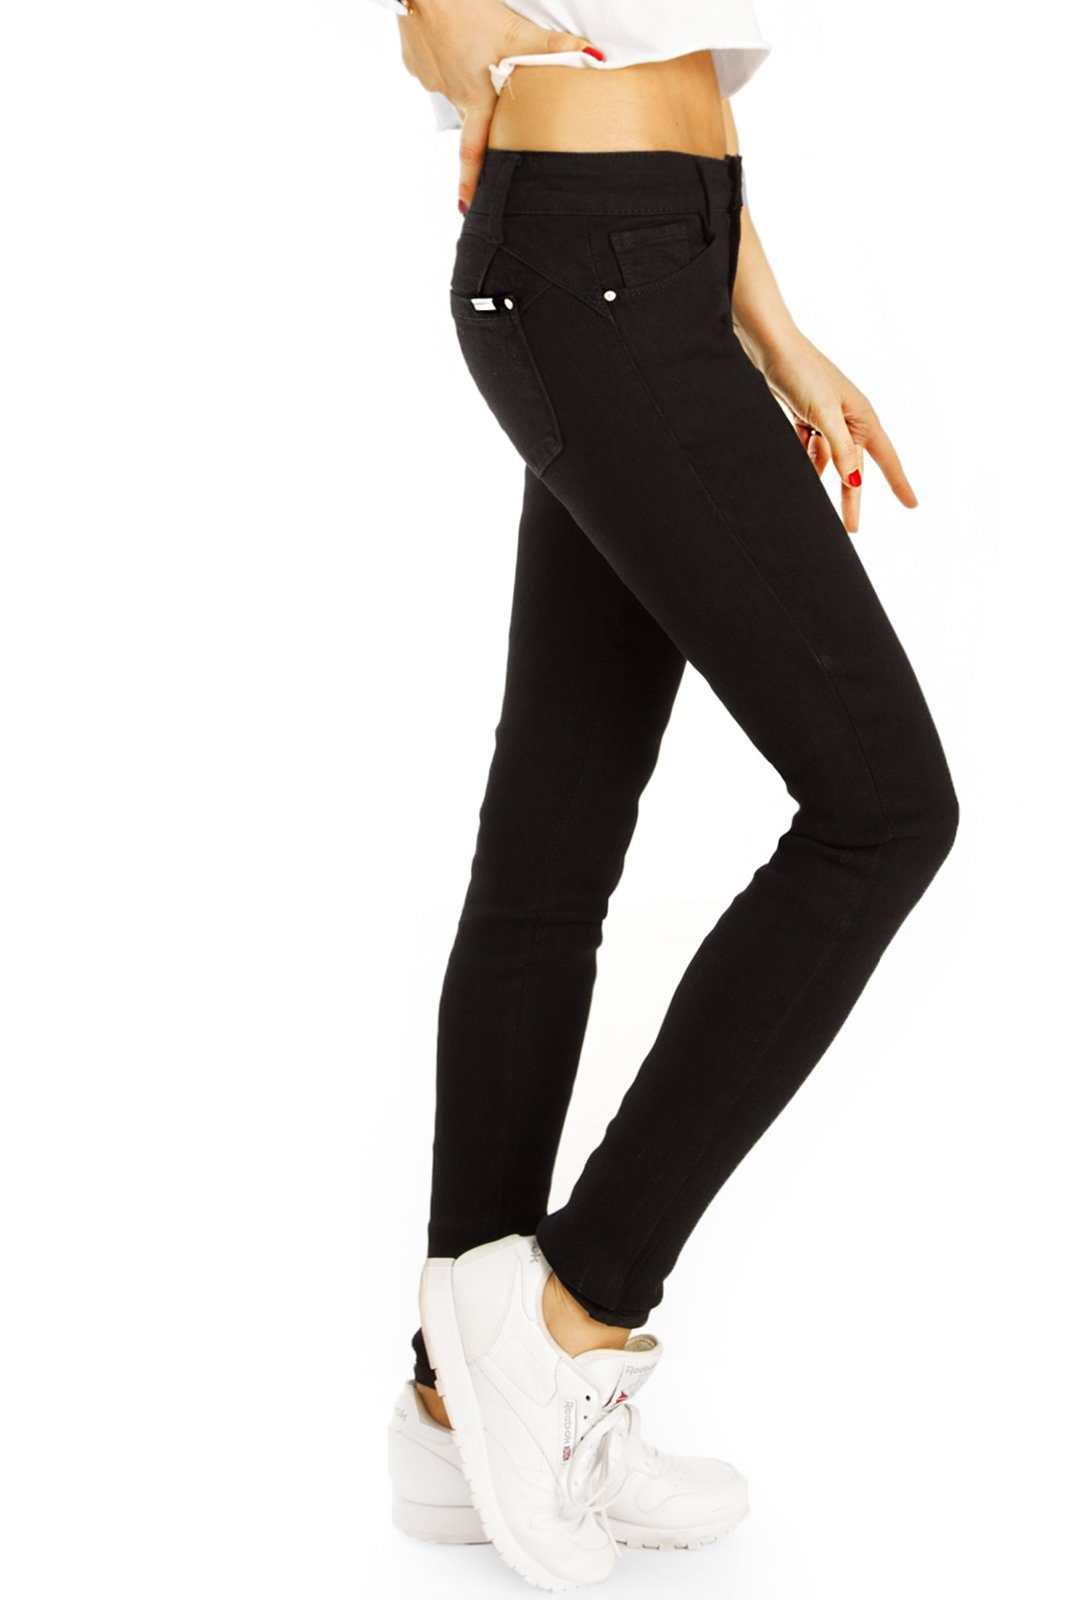 Jeans Low Waist - Hüftjeans Low-rise-Jeans 5-Pocket-Style j2e Damen mit Stretch-Anteil, Hose Röhrenjeans be - styled hüftige